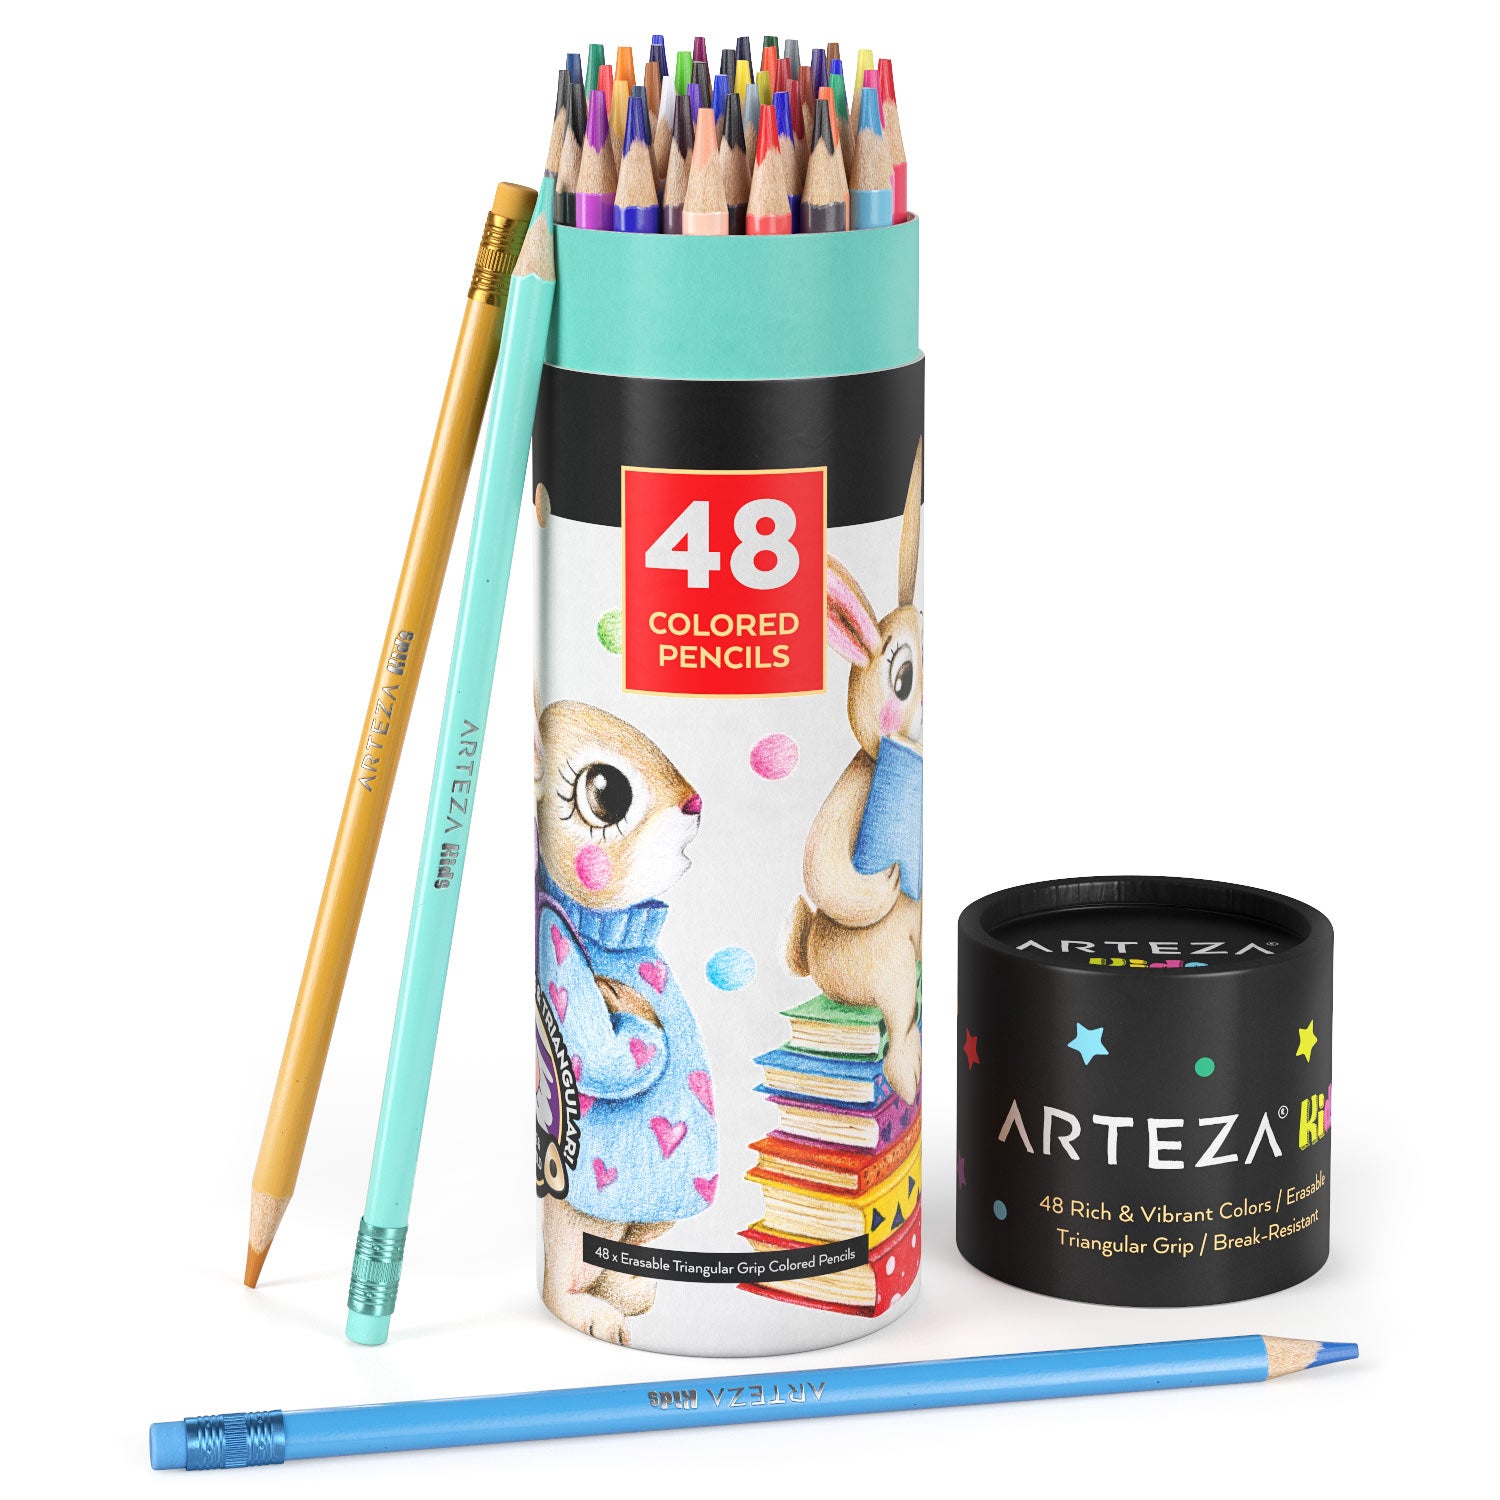 Arteza Expert Pencil Bundle Both Colored Pencils and Watercolor 1